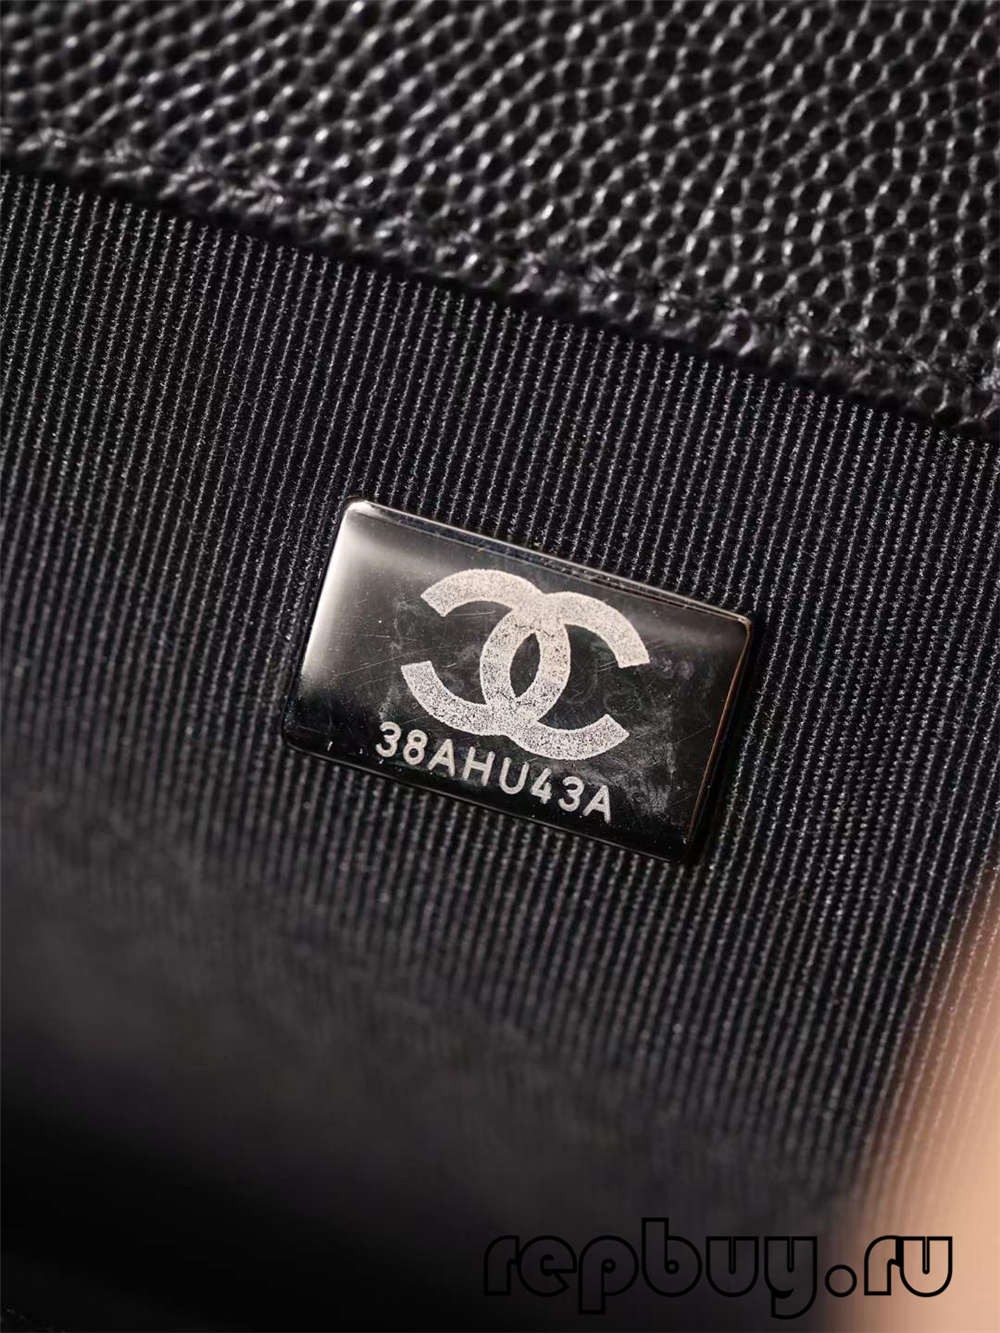 Chanel Leboy top replica handbags Inner label details (2022 Edition)-Best Quality Fake Louis Vuitton Bag Online Store, Replica designer bag ru